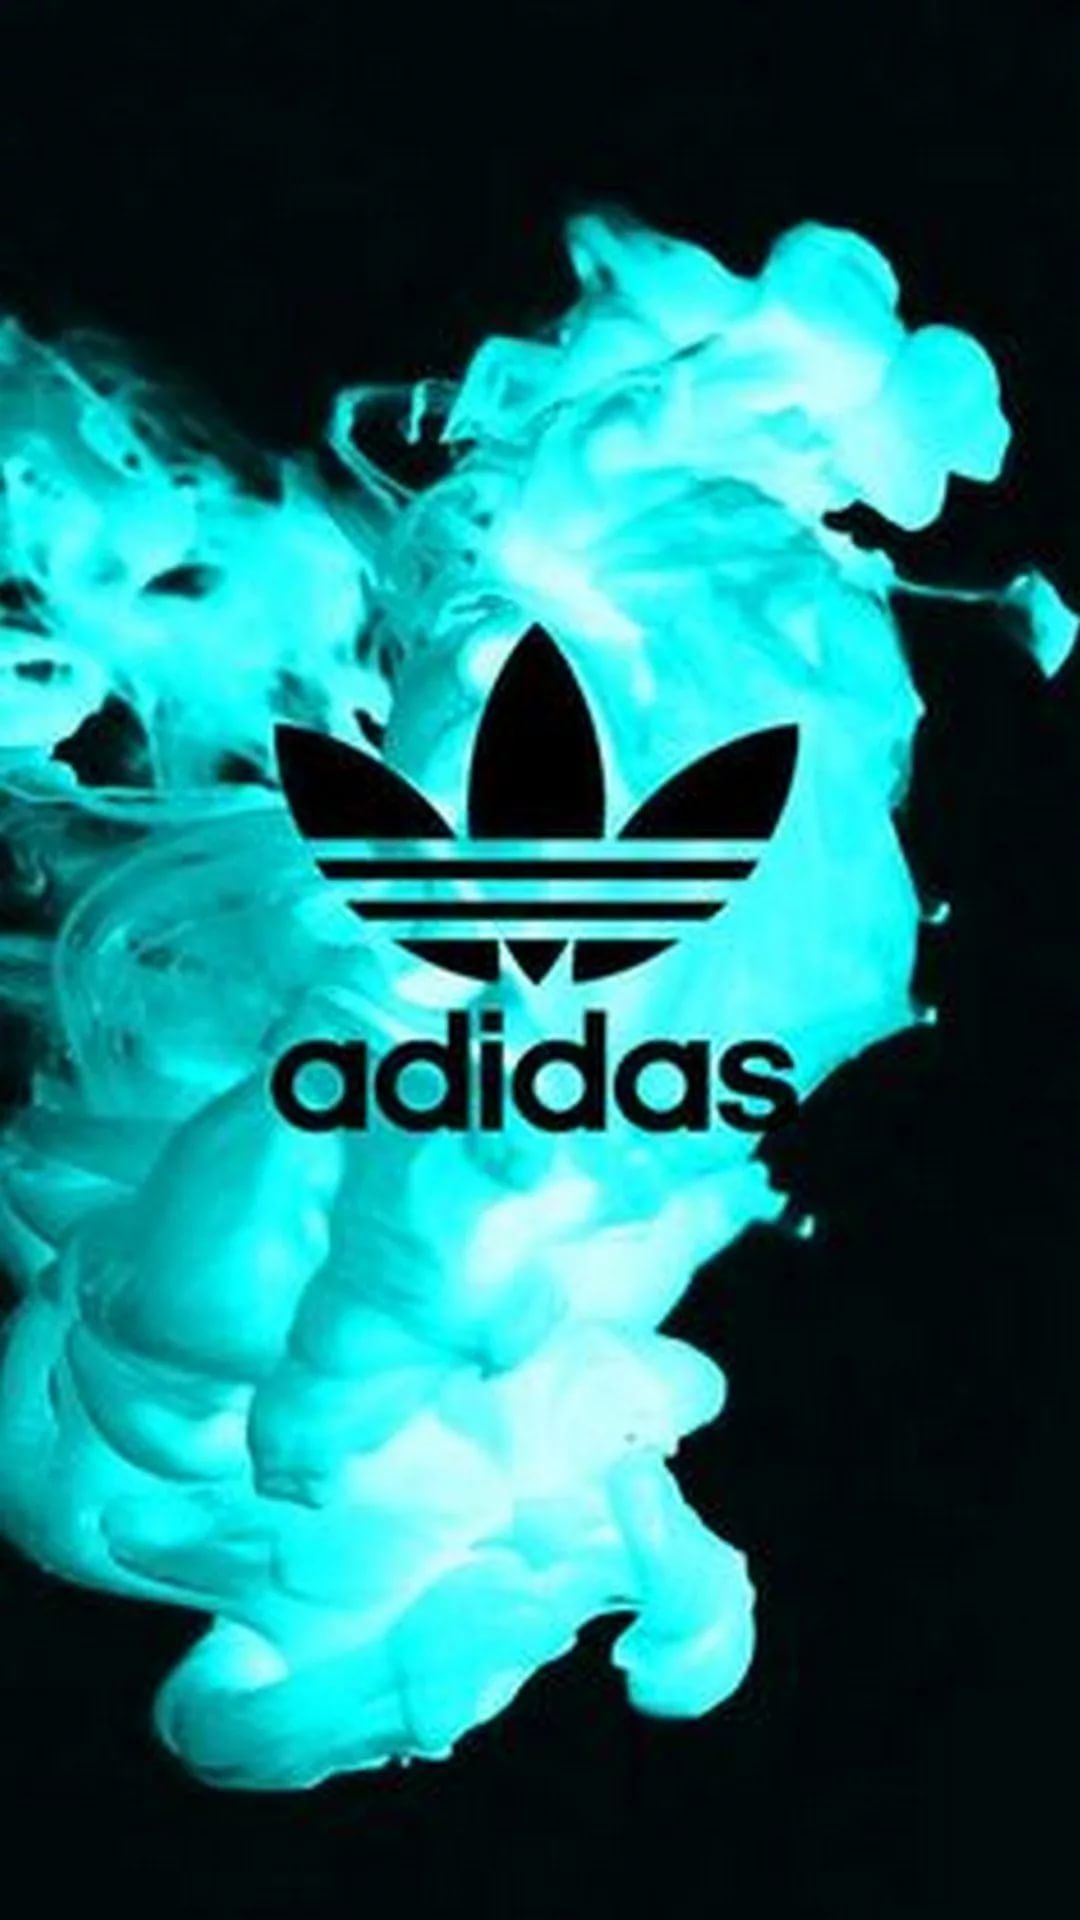 Adidas iPhone 7 wallpaper